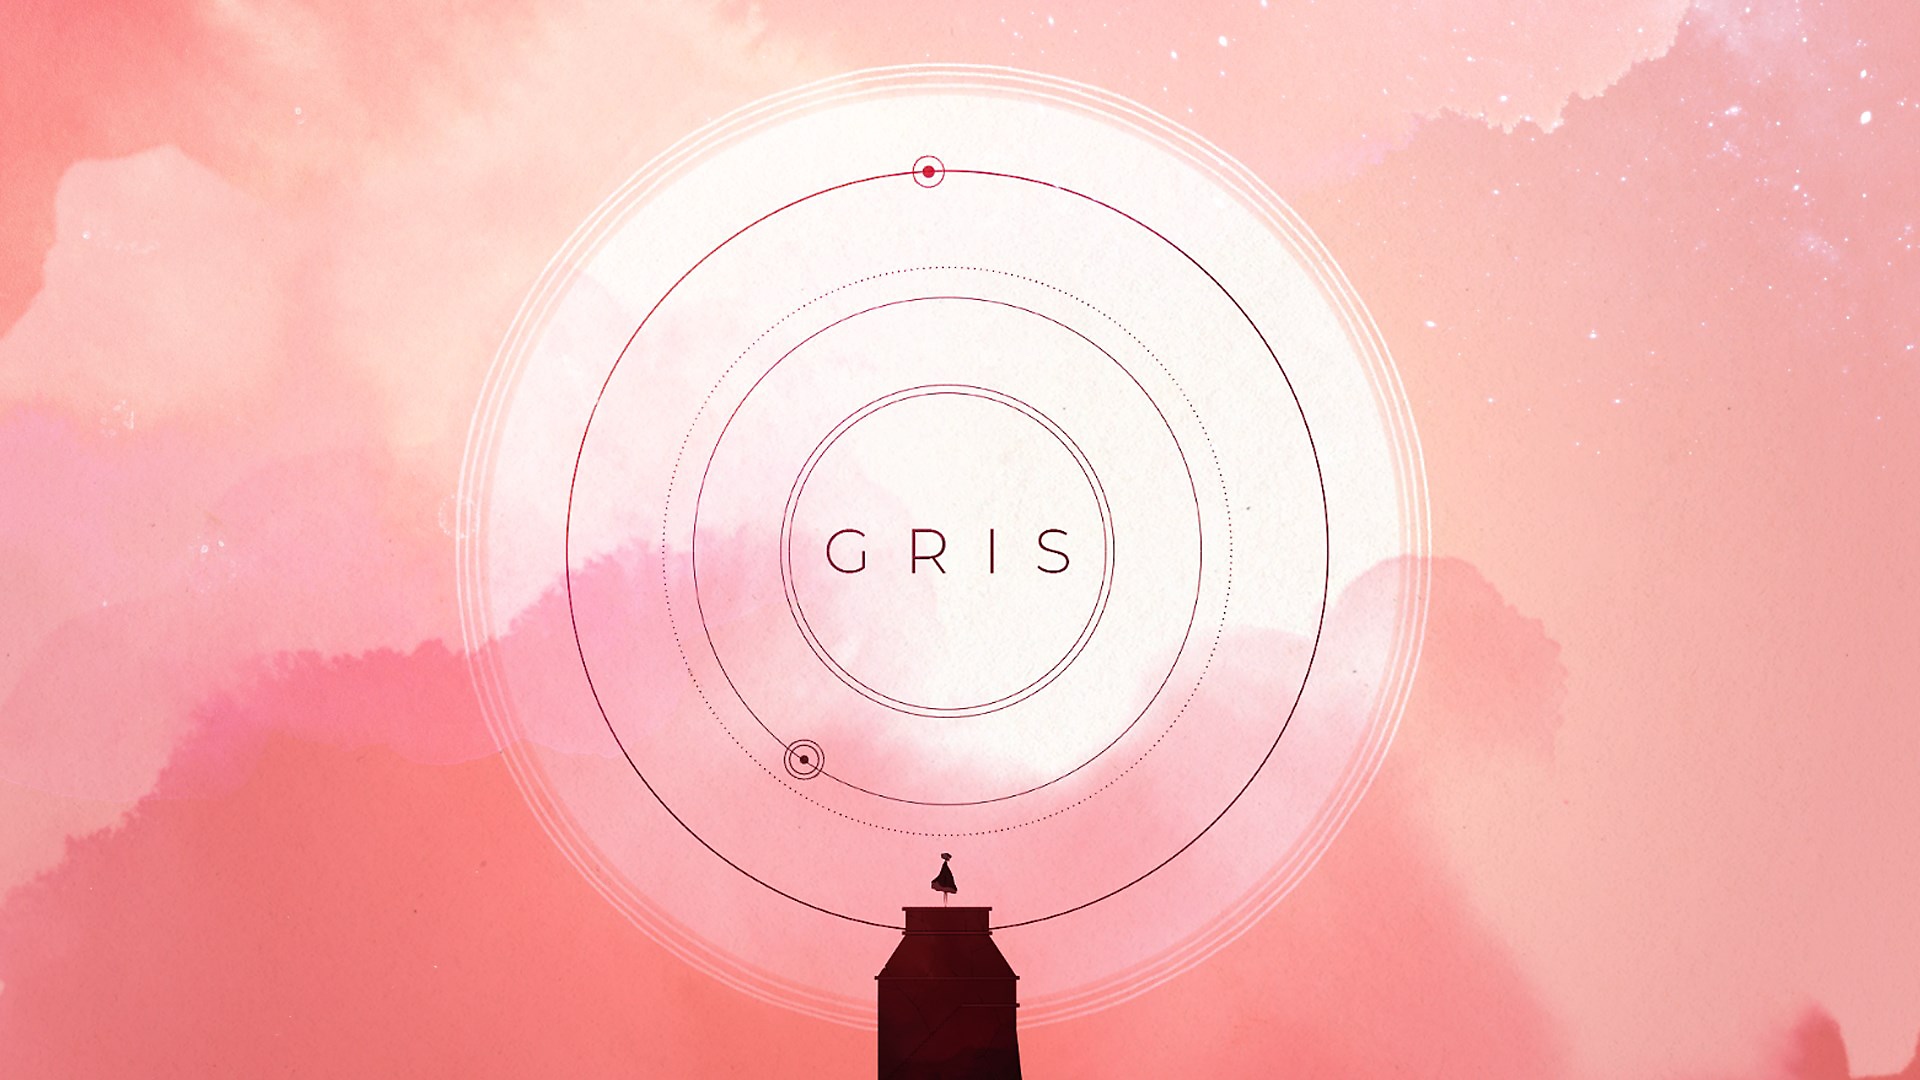 Gris - trailer de lançamento PS5